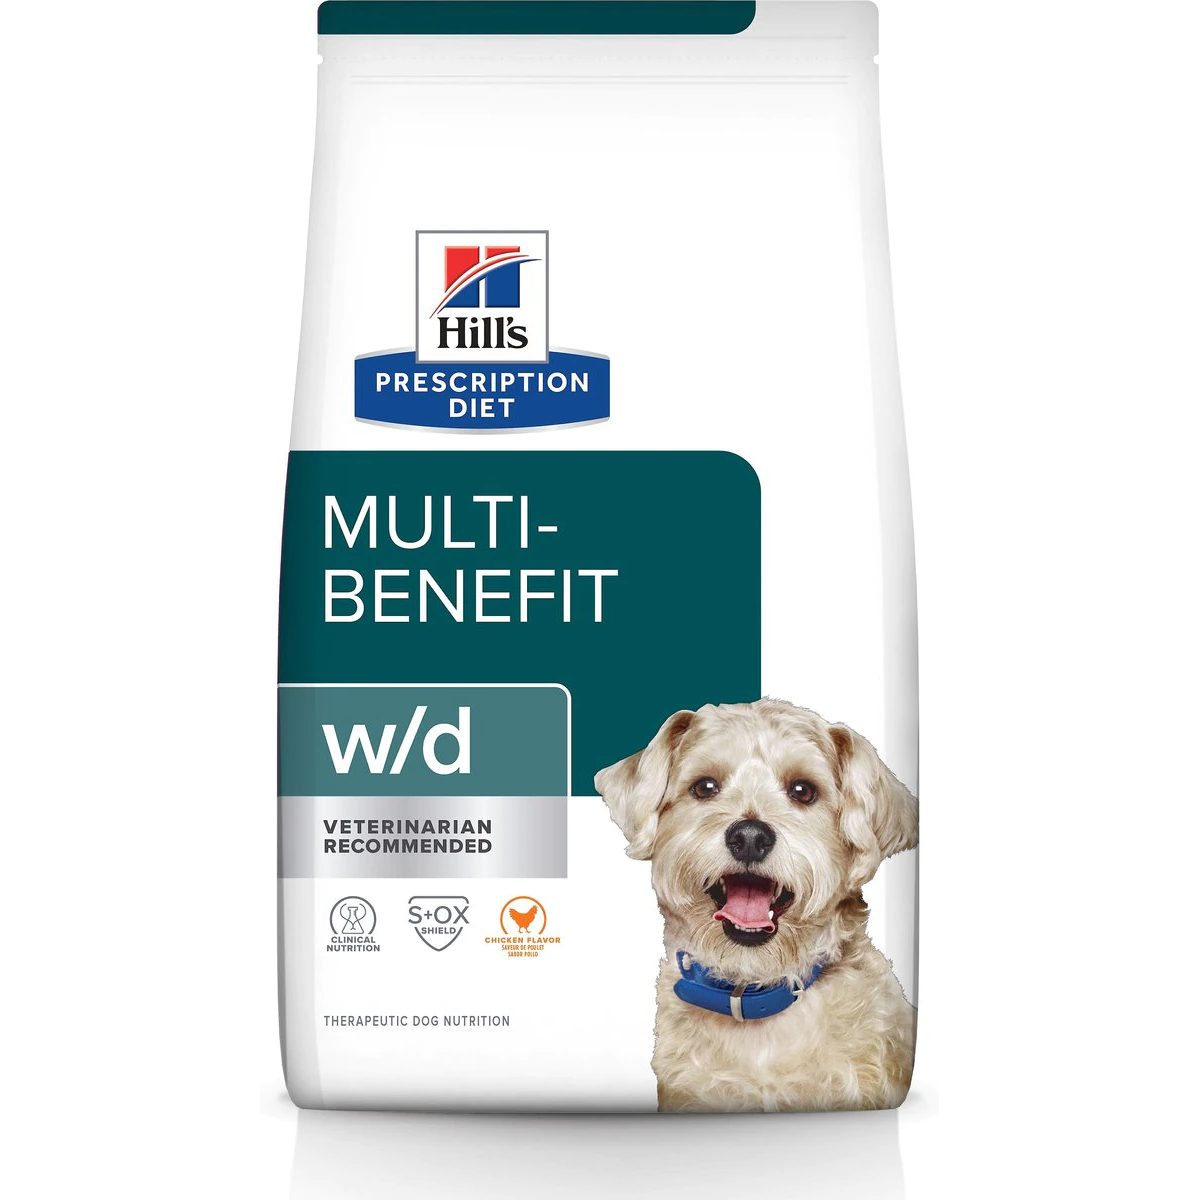 Hill’s Prescription Diet w/d Multi-Benefit Dry Dog Food